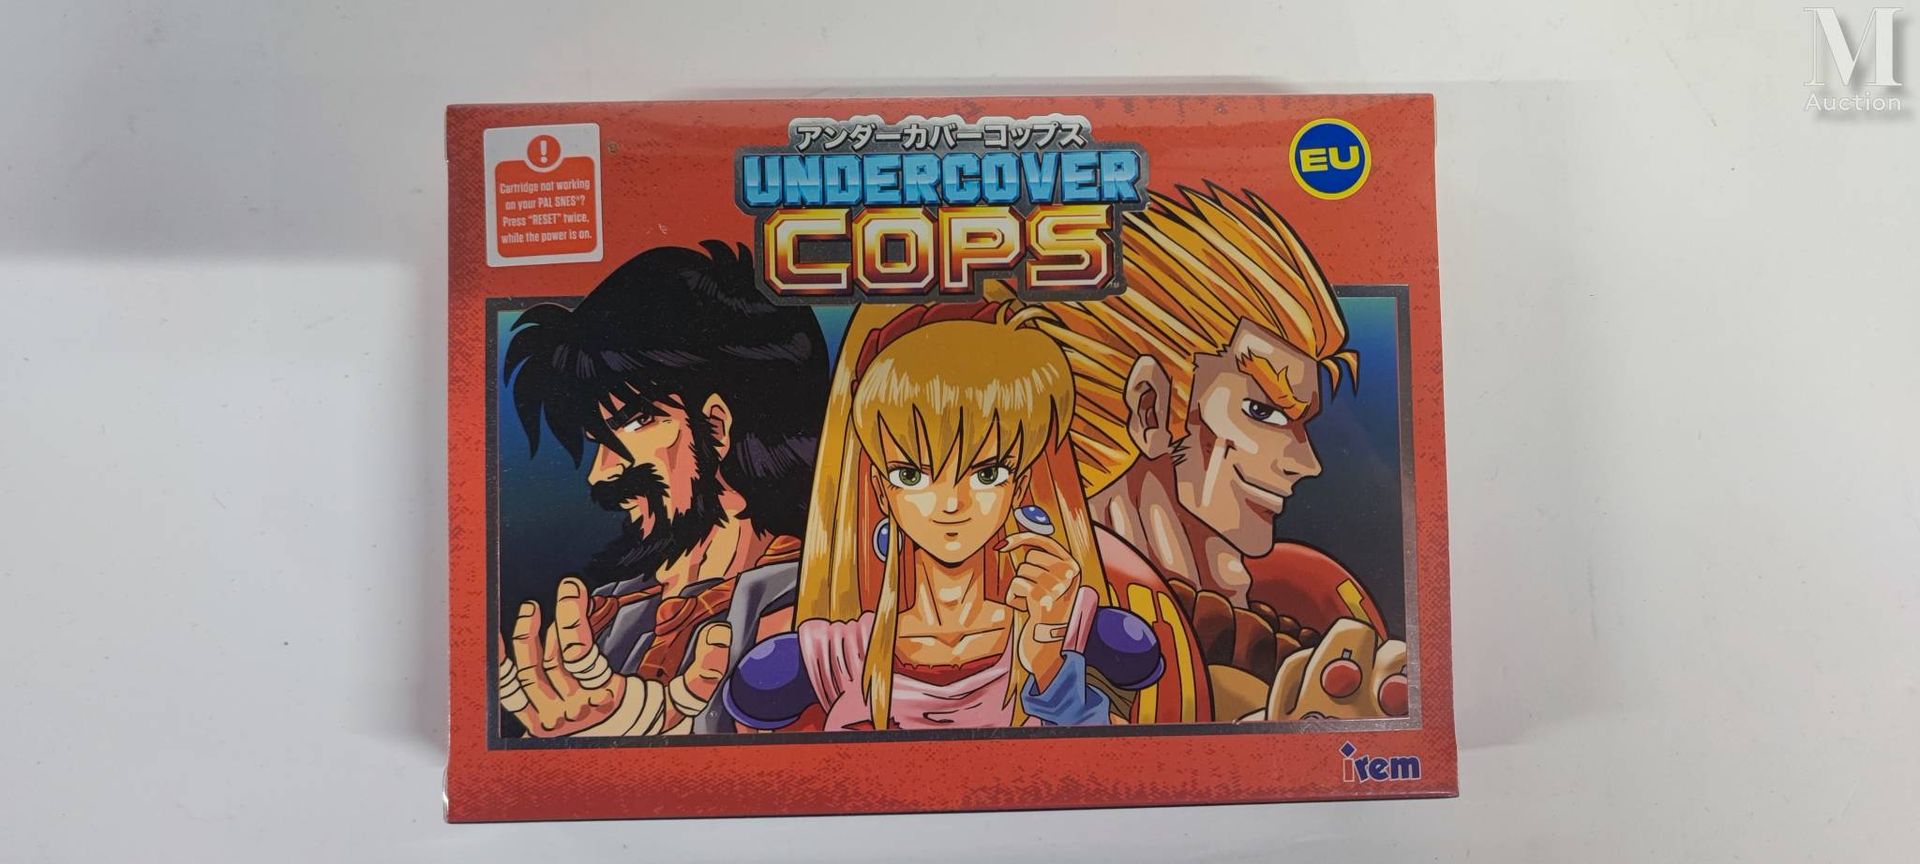 UNDERCOVER COPS (RE. - RETRO-BIT VERSION) - 2021 卧底警察（复古版）--2021年

原版游戏的再版，由Retr&hellip;